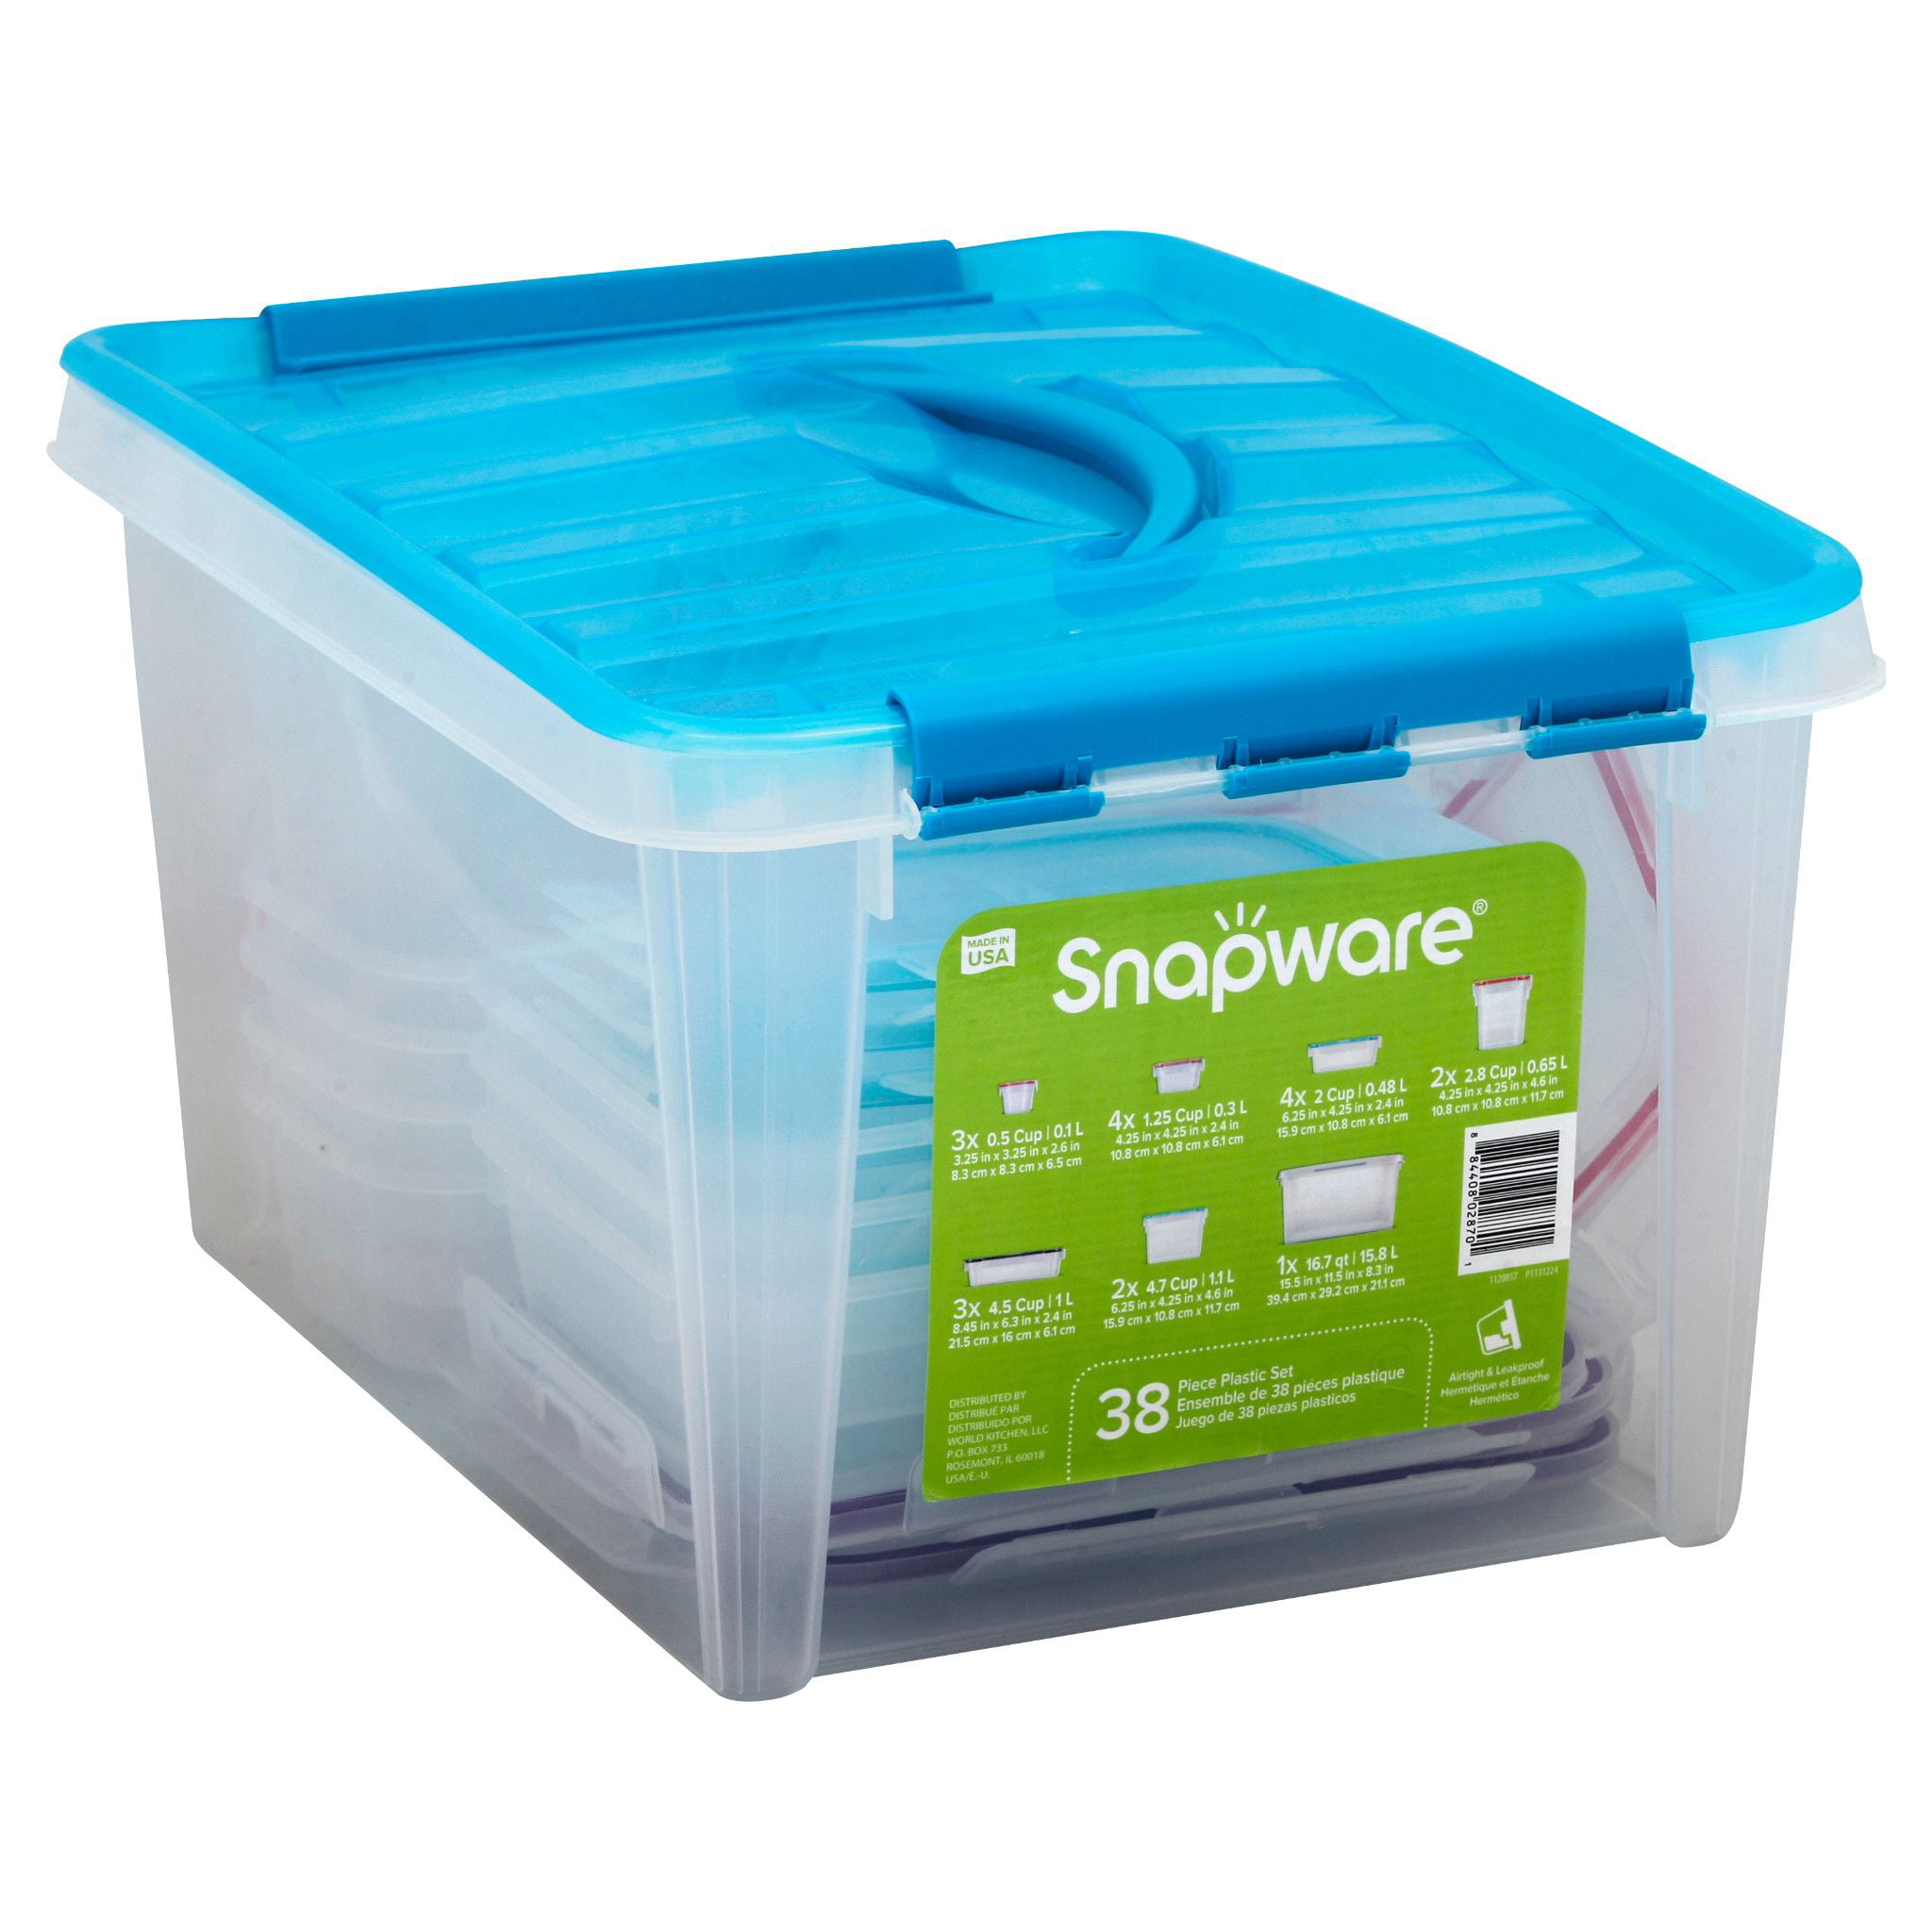 Snapware Plastic Storage Container Set 38 Pieces Airtight & Leak proof NEW  884408032432